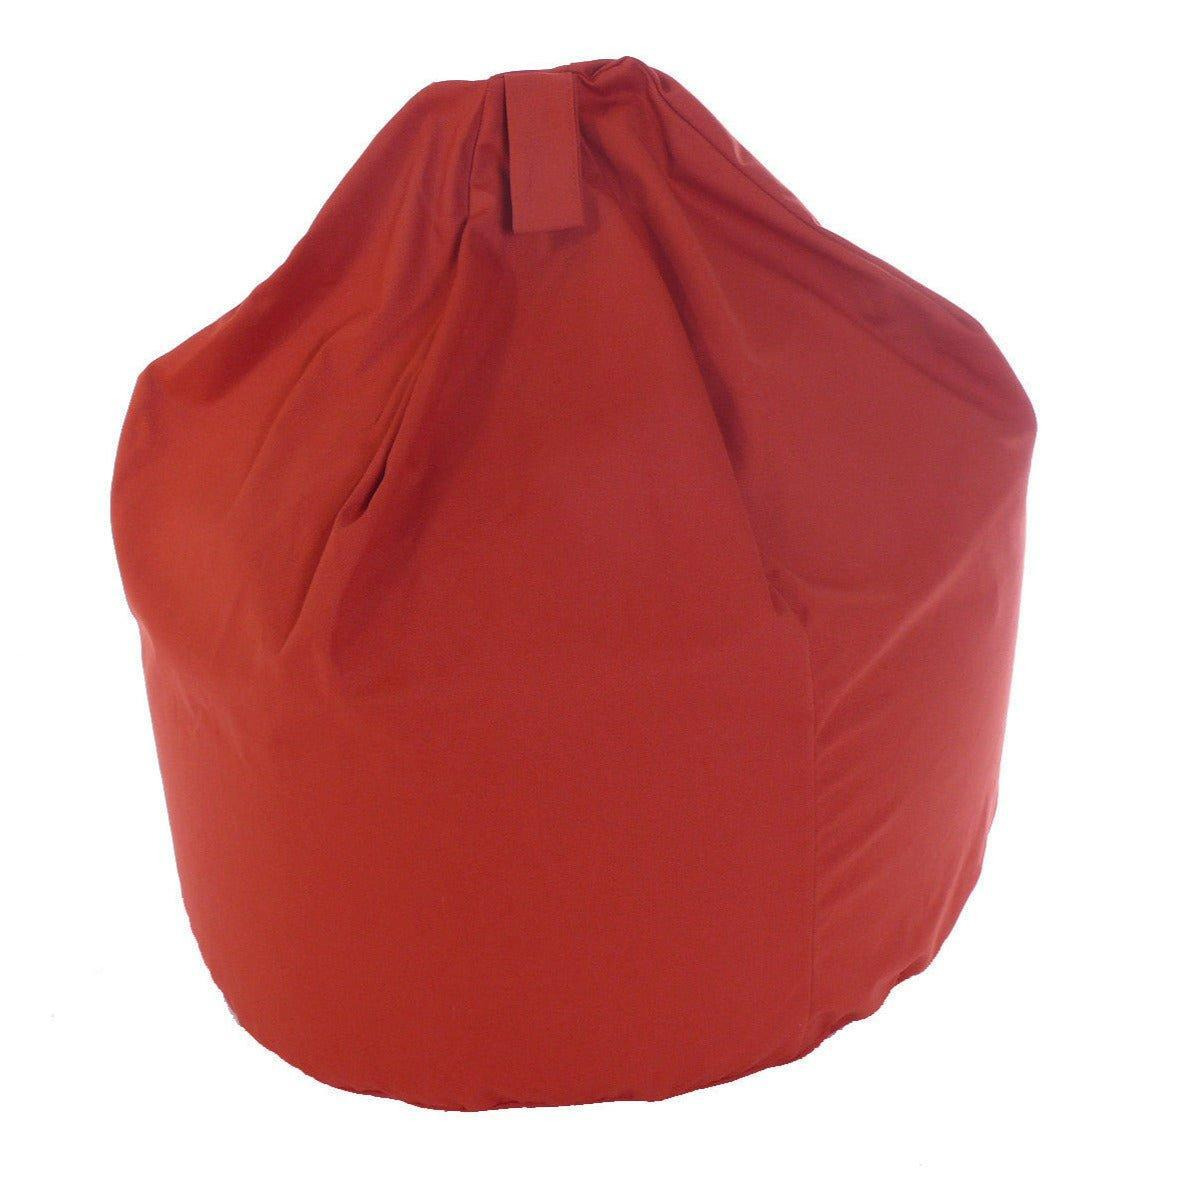 Cotton Twill Terracotta Bean Bag Large Size - image 1